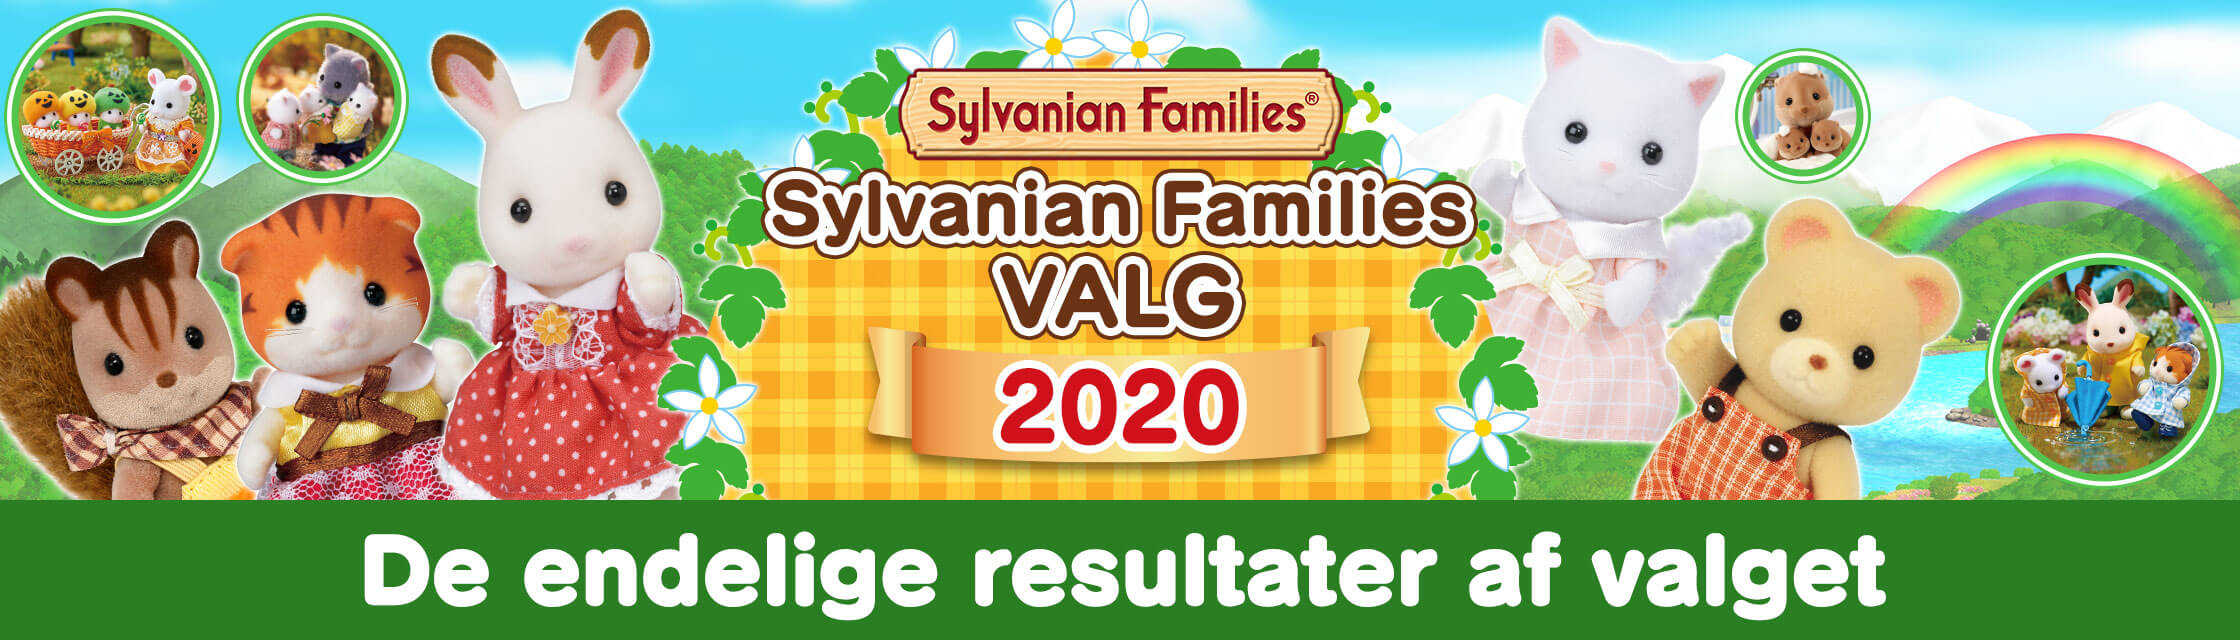 Sylvanian Families VALG